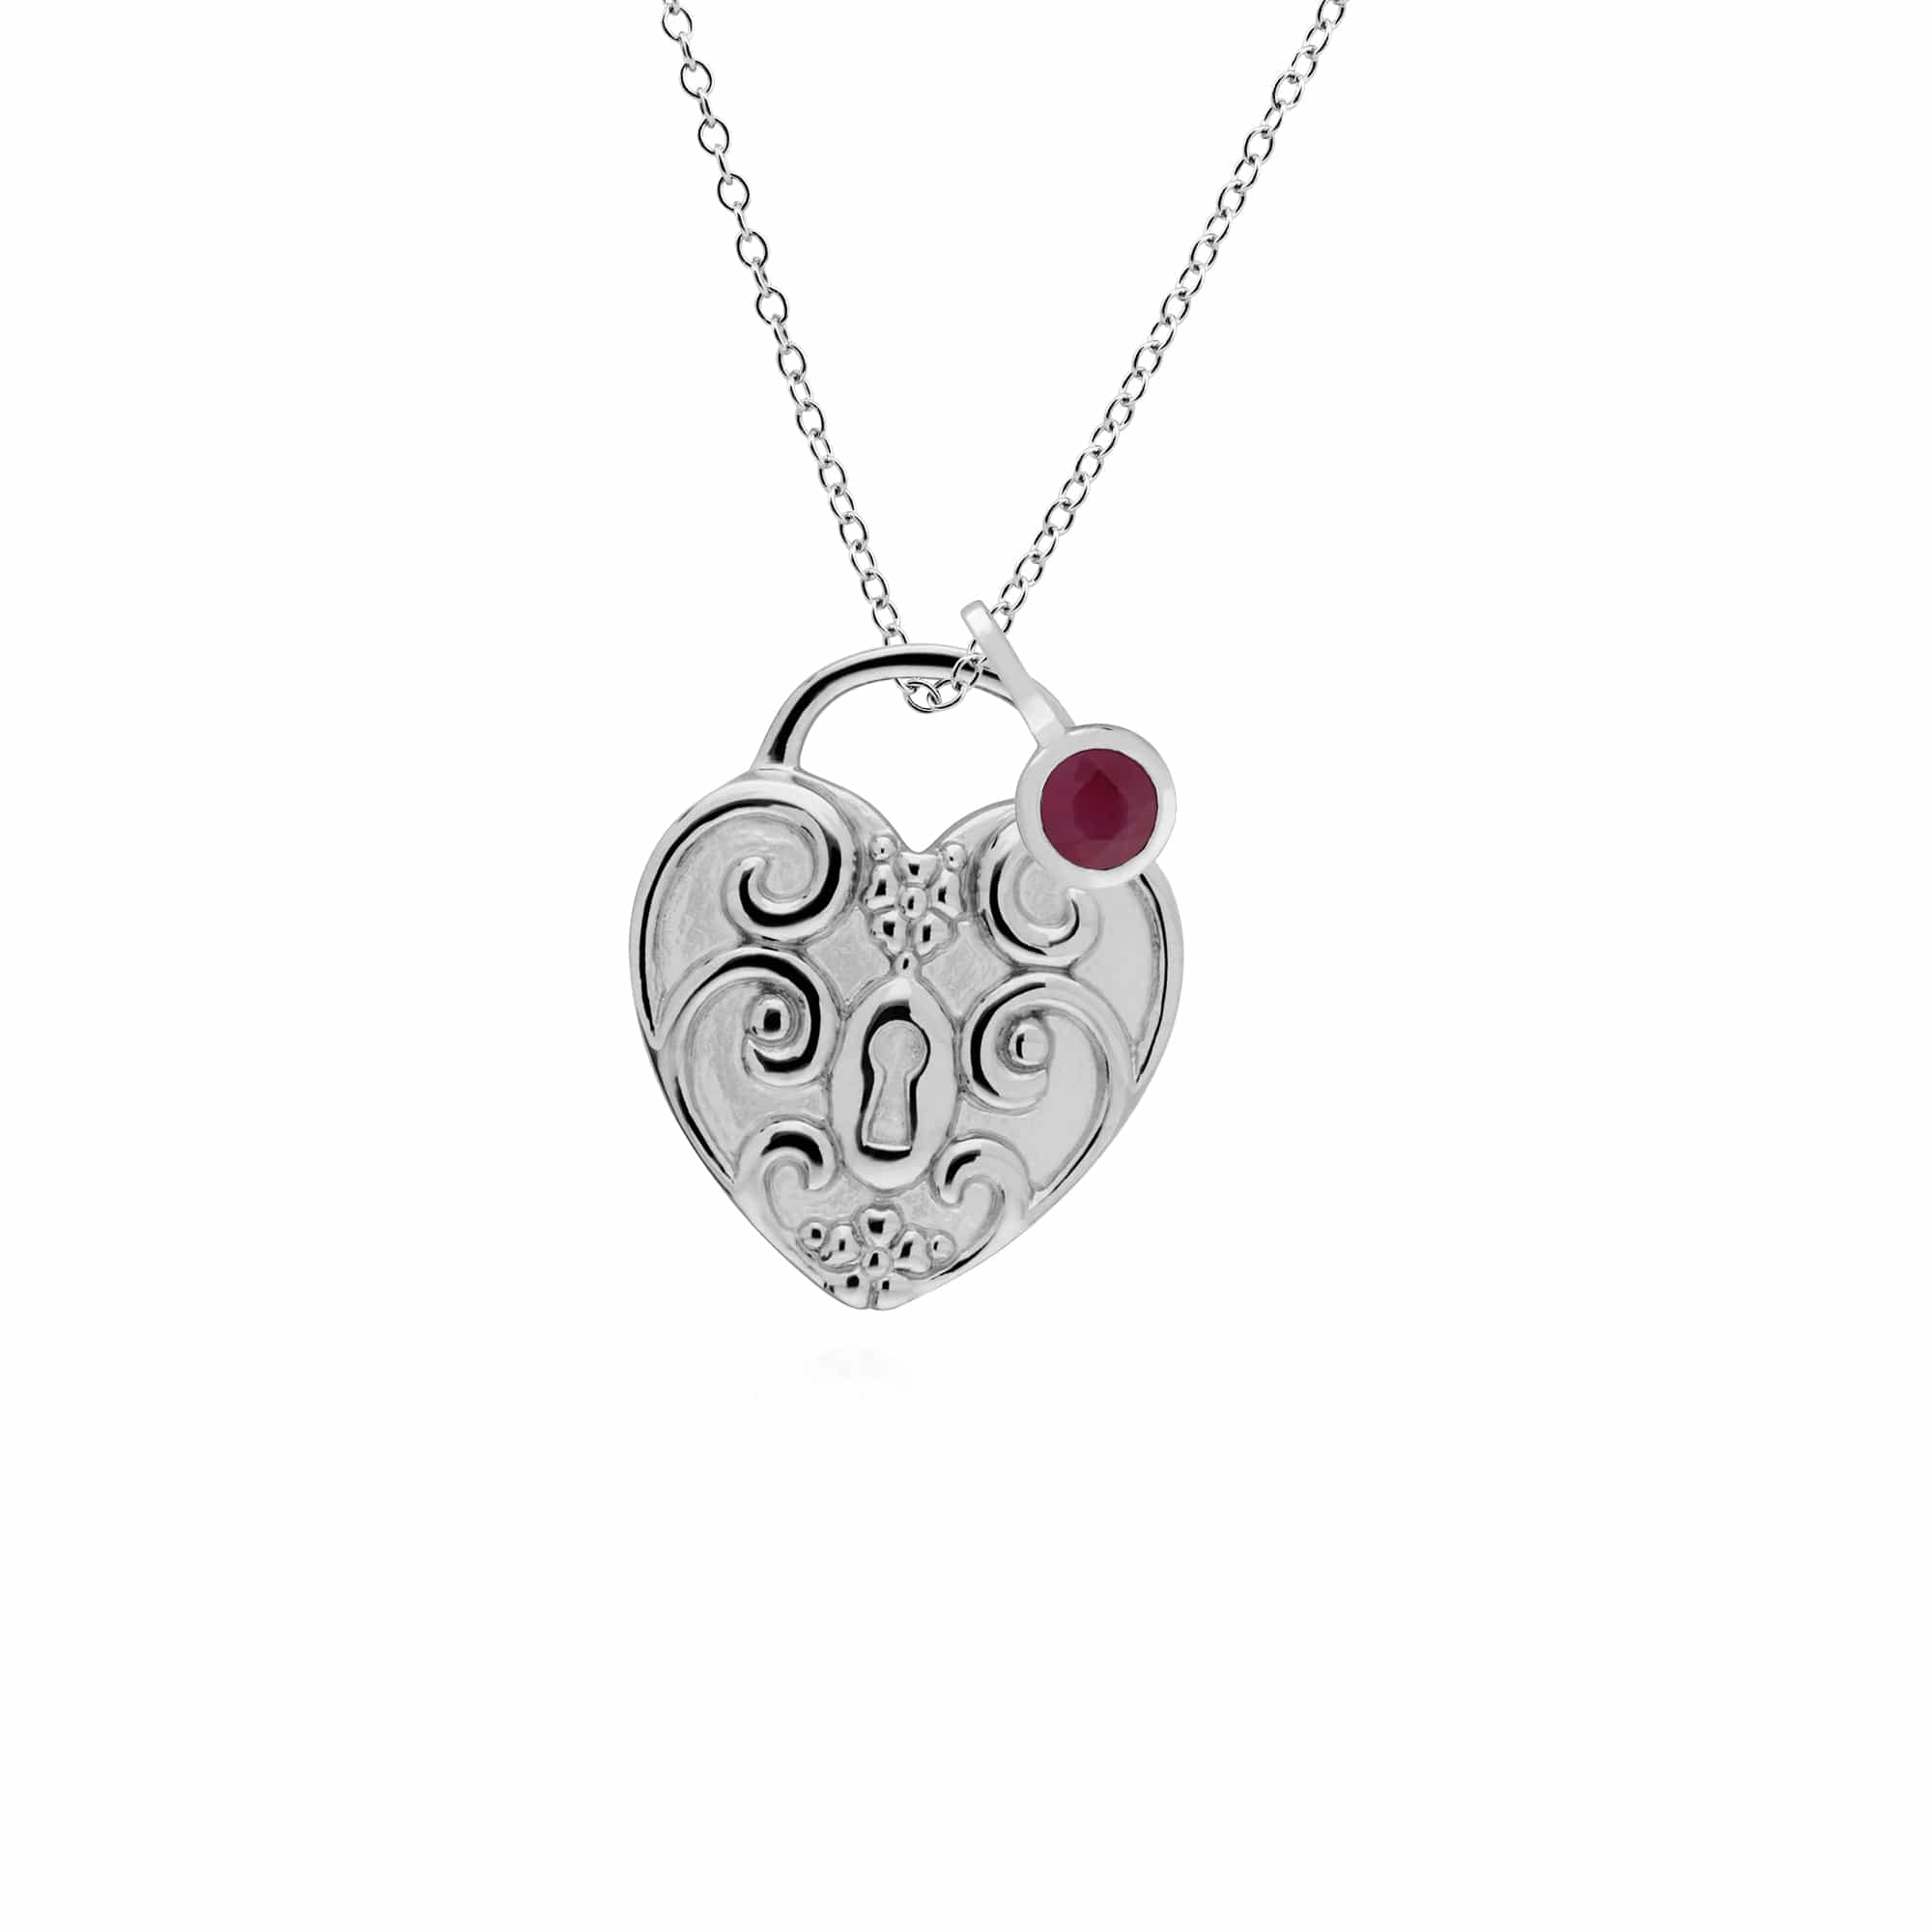 270P027609925-270P026601925 Classic Swirl Heart Lock Pendant & Ruby Charm in 925 Sterling Silver 1